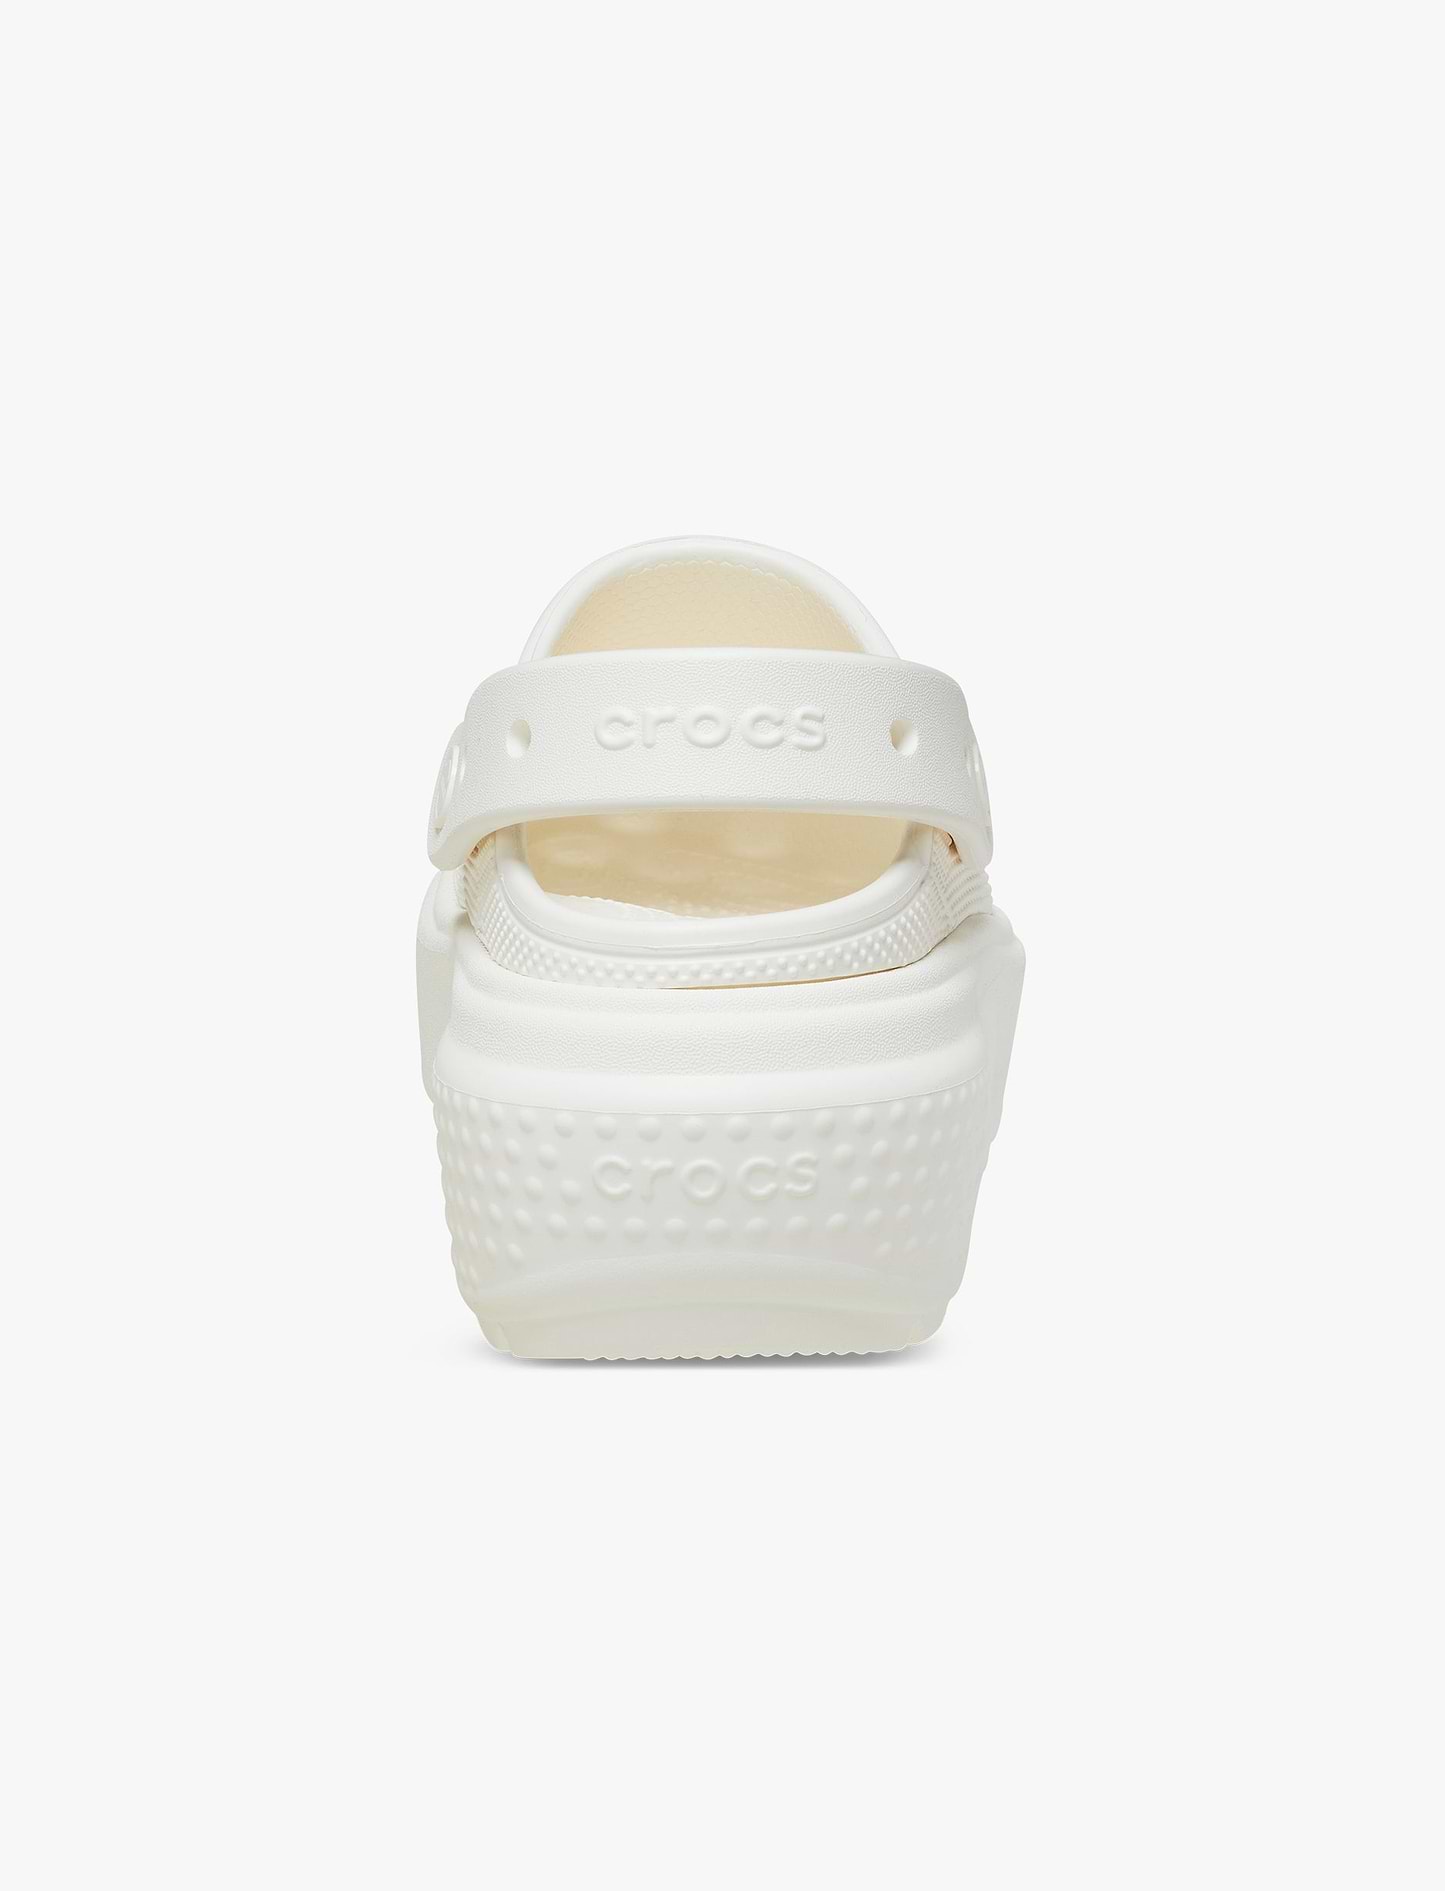 Crocs Stomp Clog - כפפי פלטפורמה קלוג סטומפ לנשים בצבע לבן